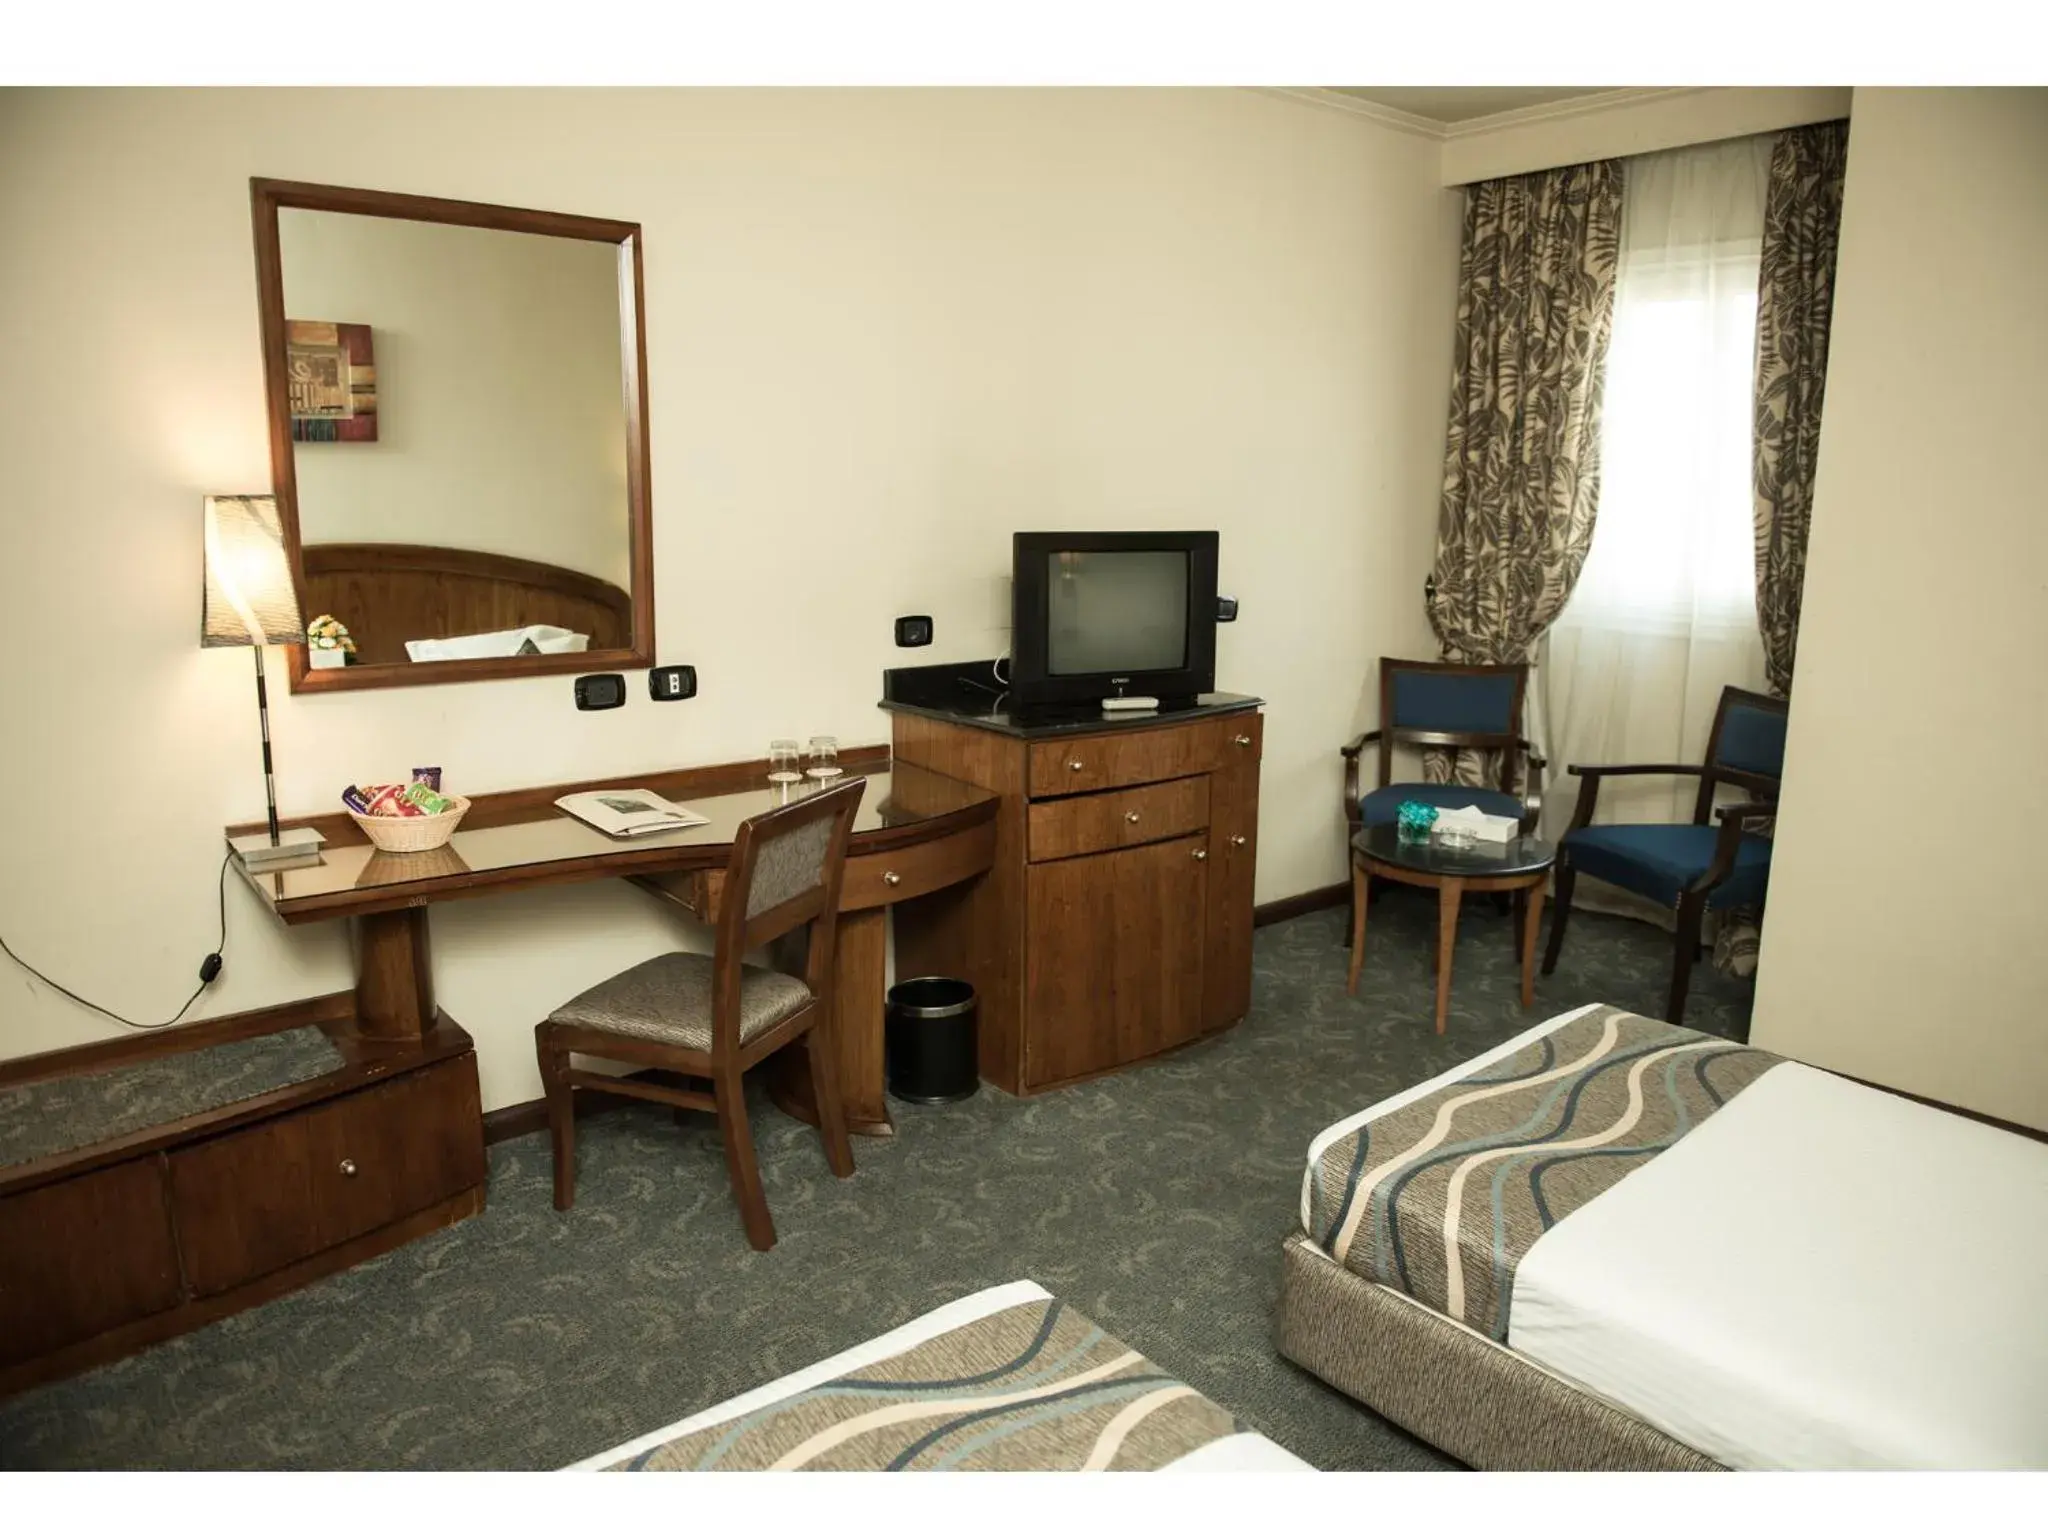 Bedroom, Room Photo in Cherry Maryski Hotel